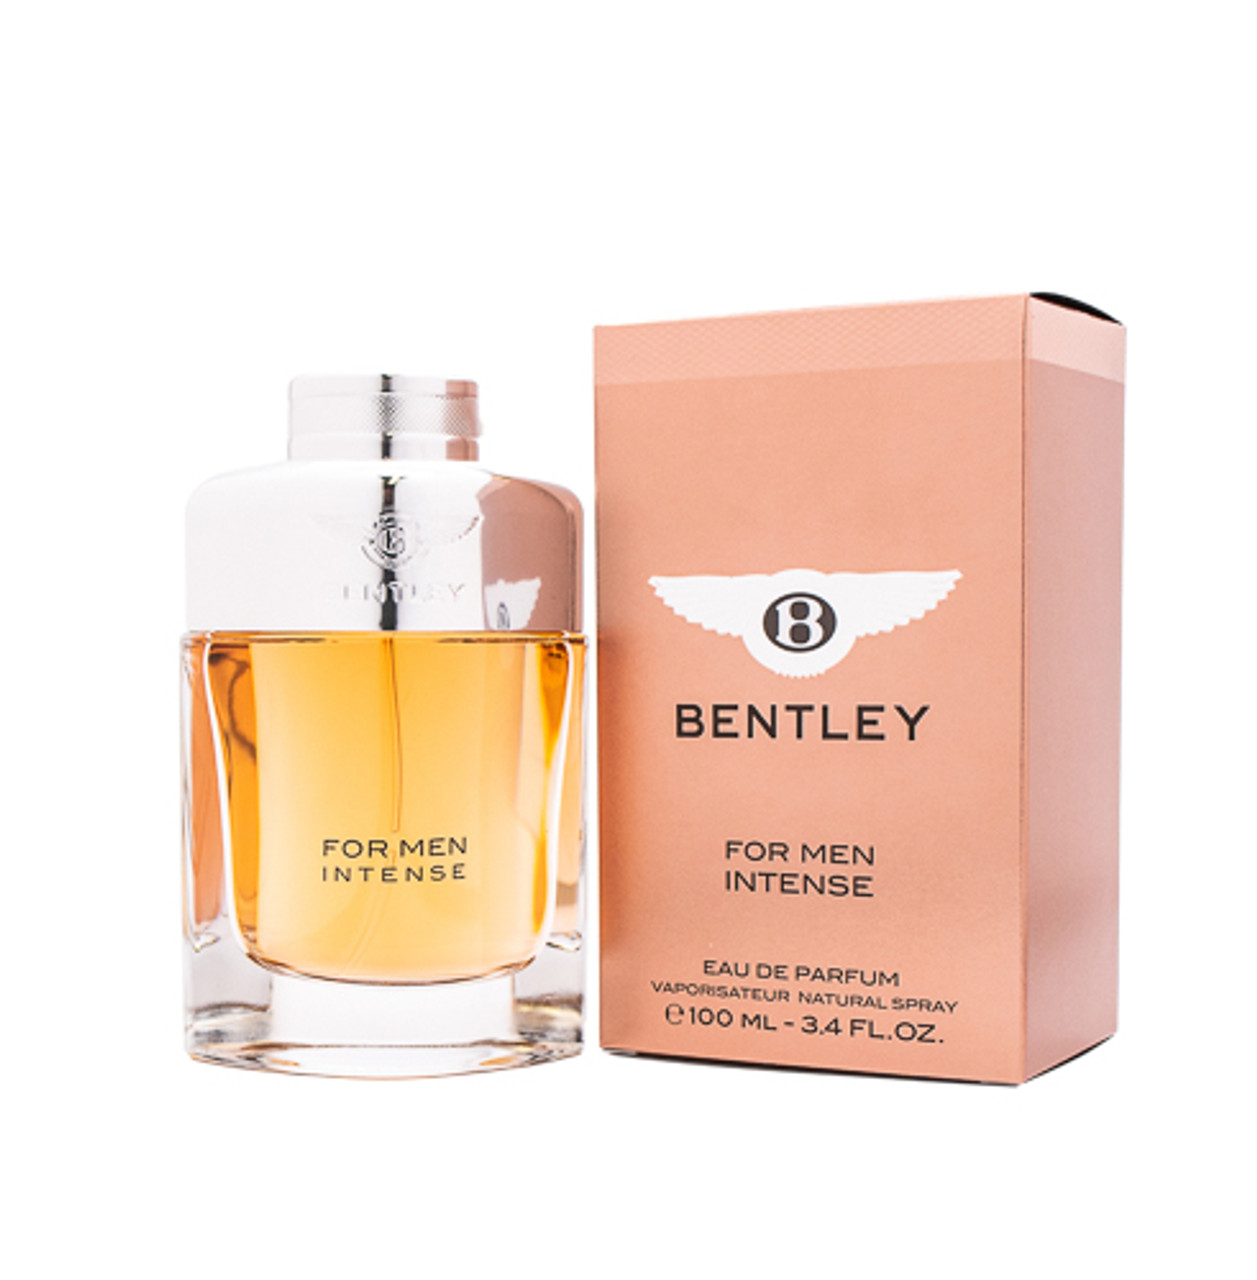 Bentley For Men Intense - Perfume Decant – Decoris Amora Perfume